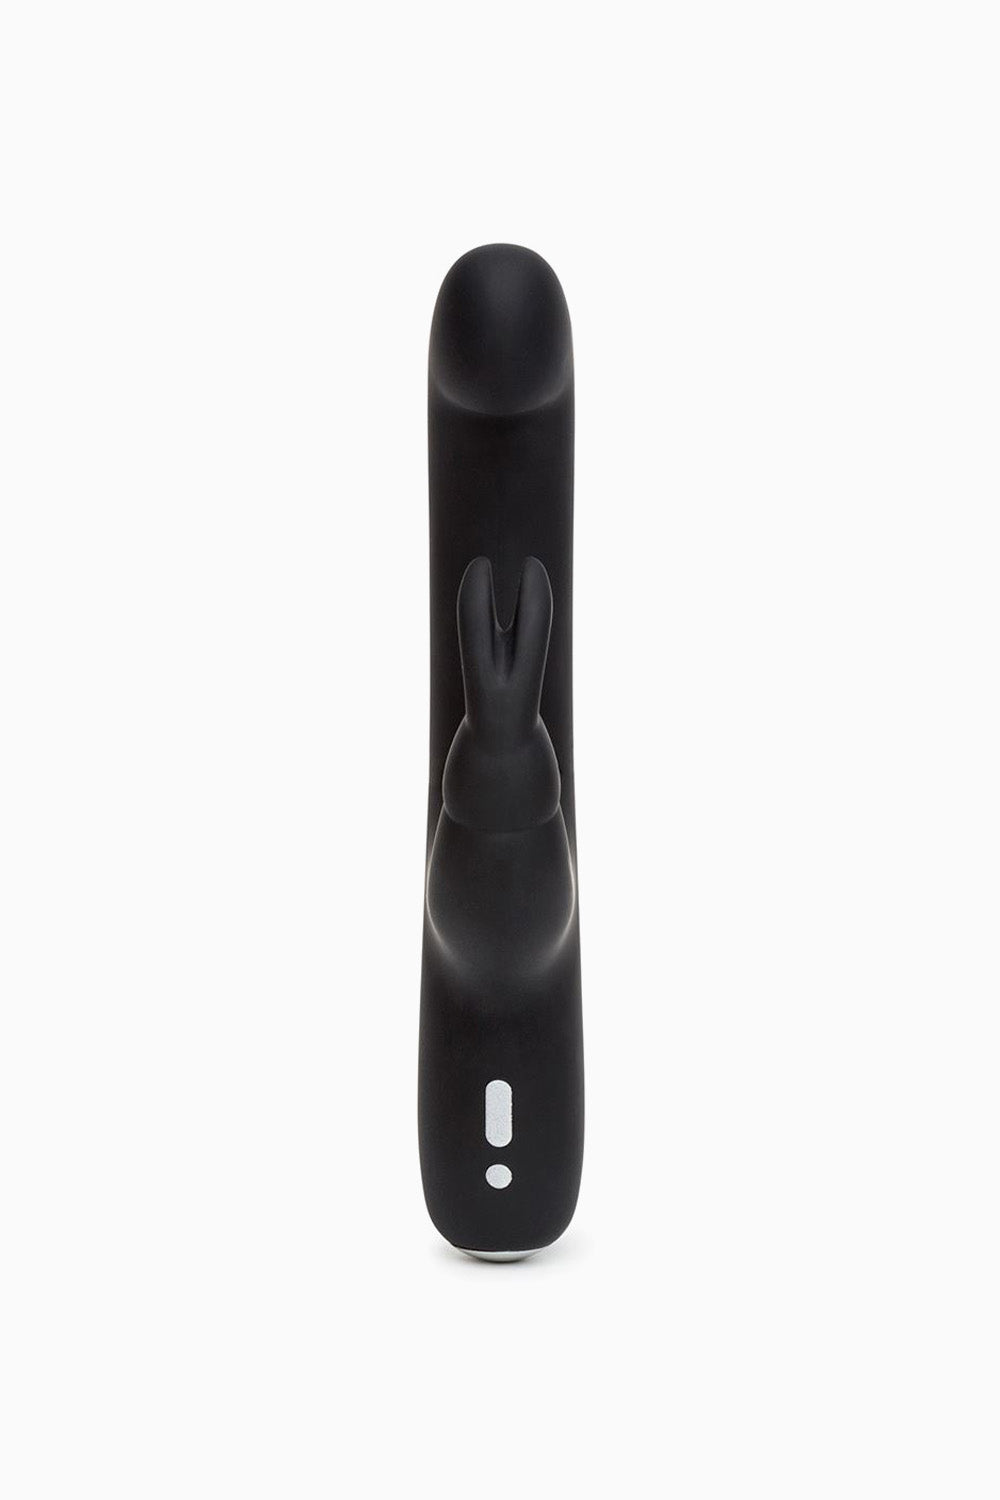 Happy Rabbit Slimline G-Spot Rechargeable Rabbit Vibrator Black, 9.5 Inches